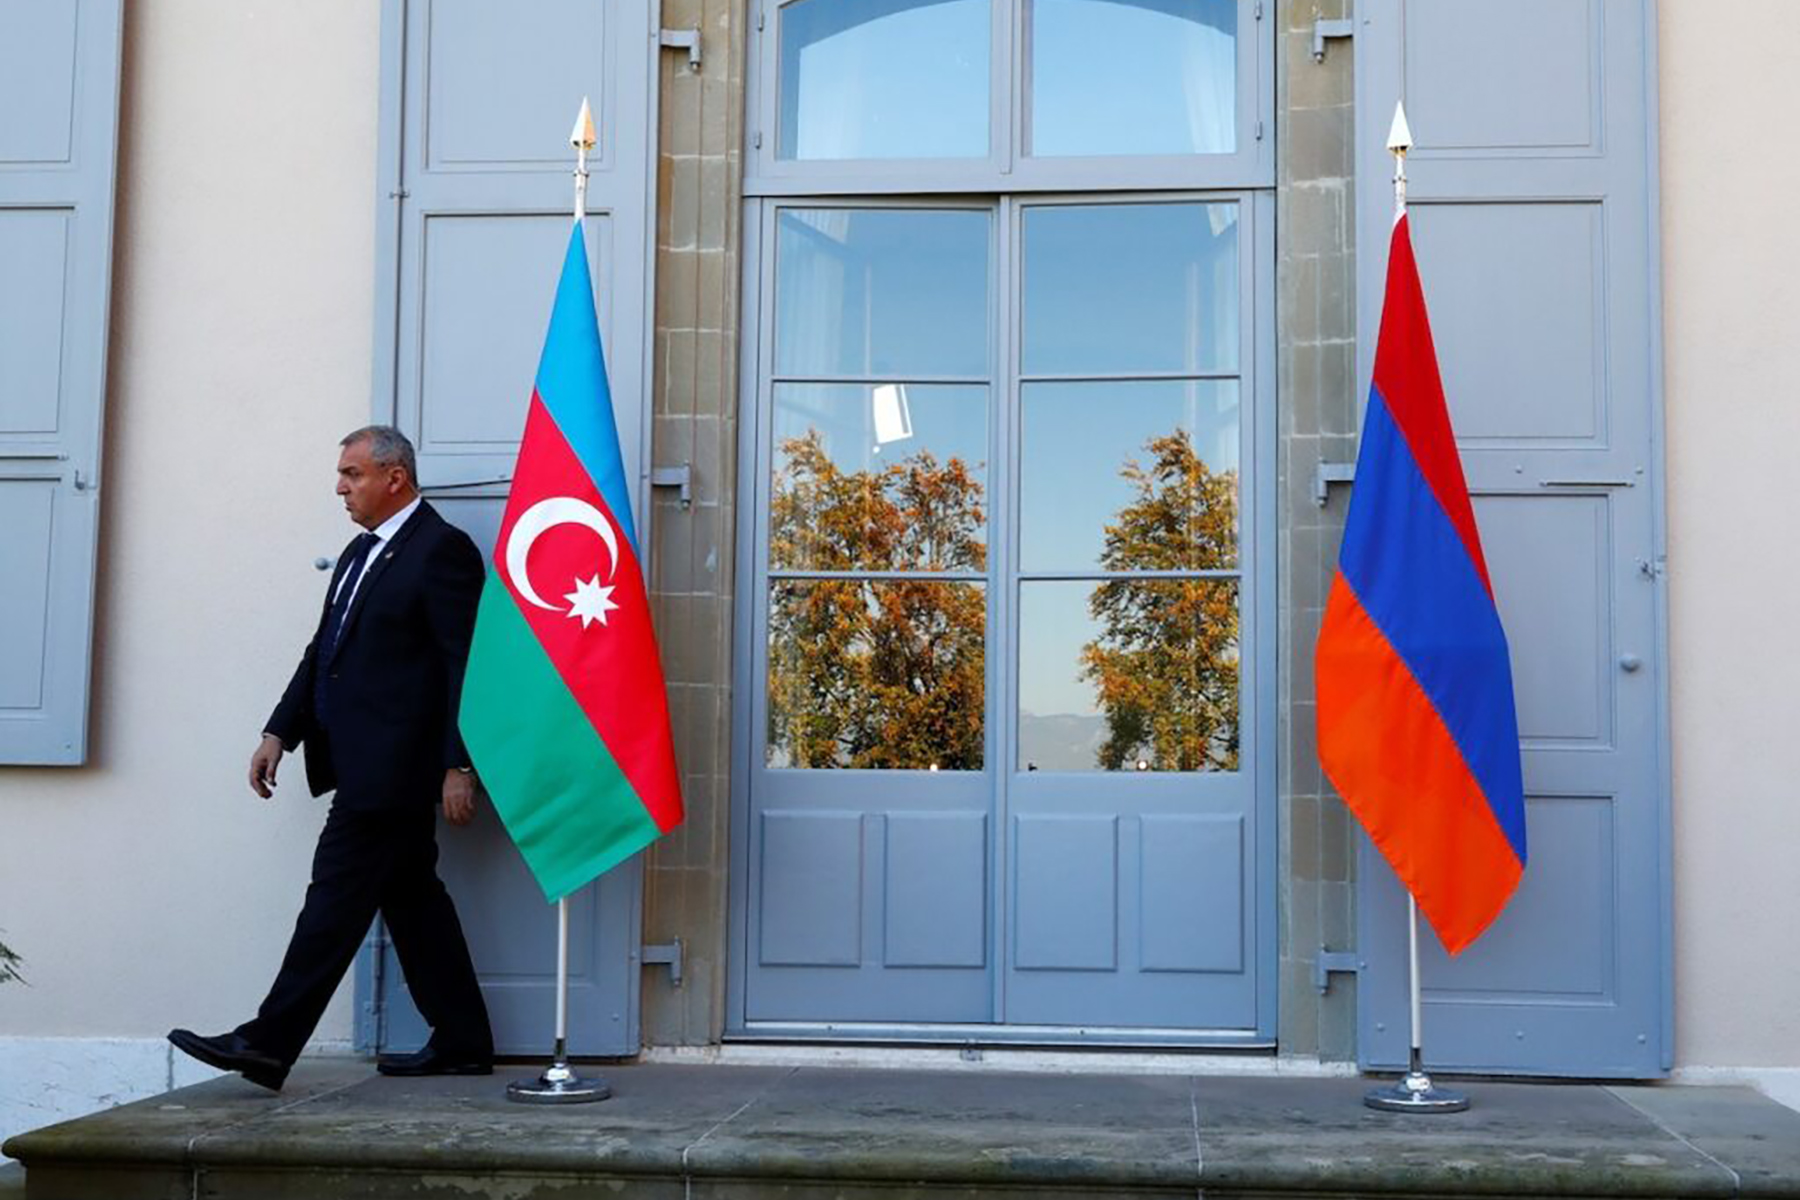 Azerbaijan, Armenia say U.S. to host talks over territorial dispute